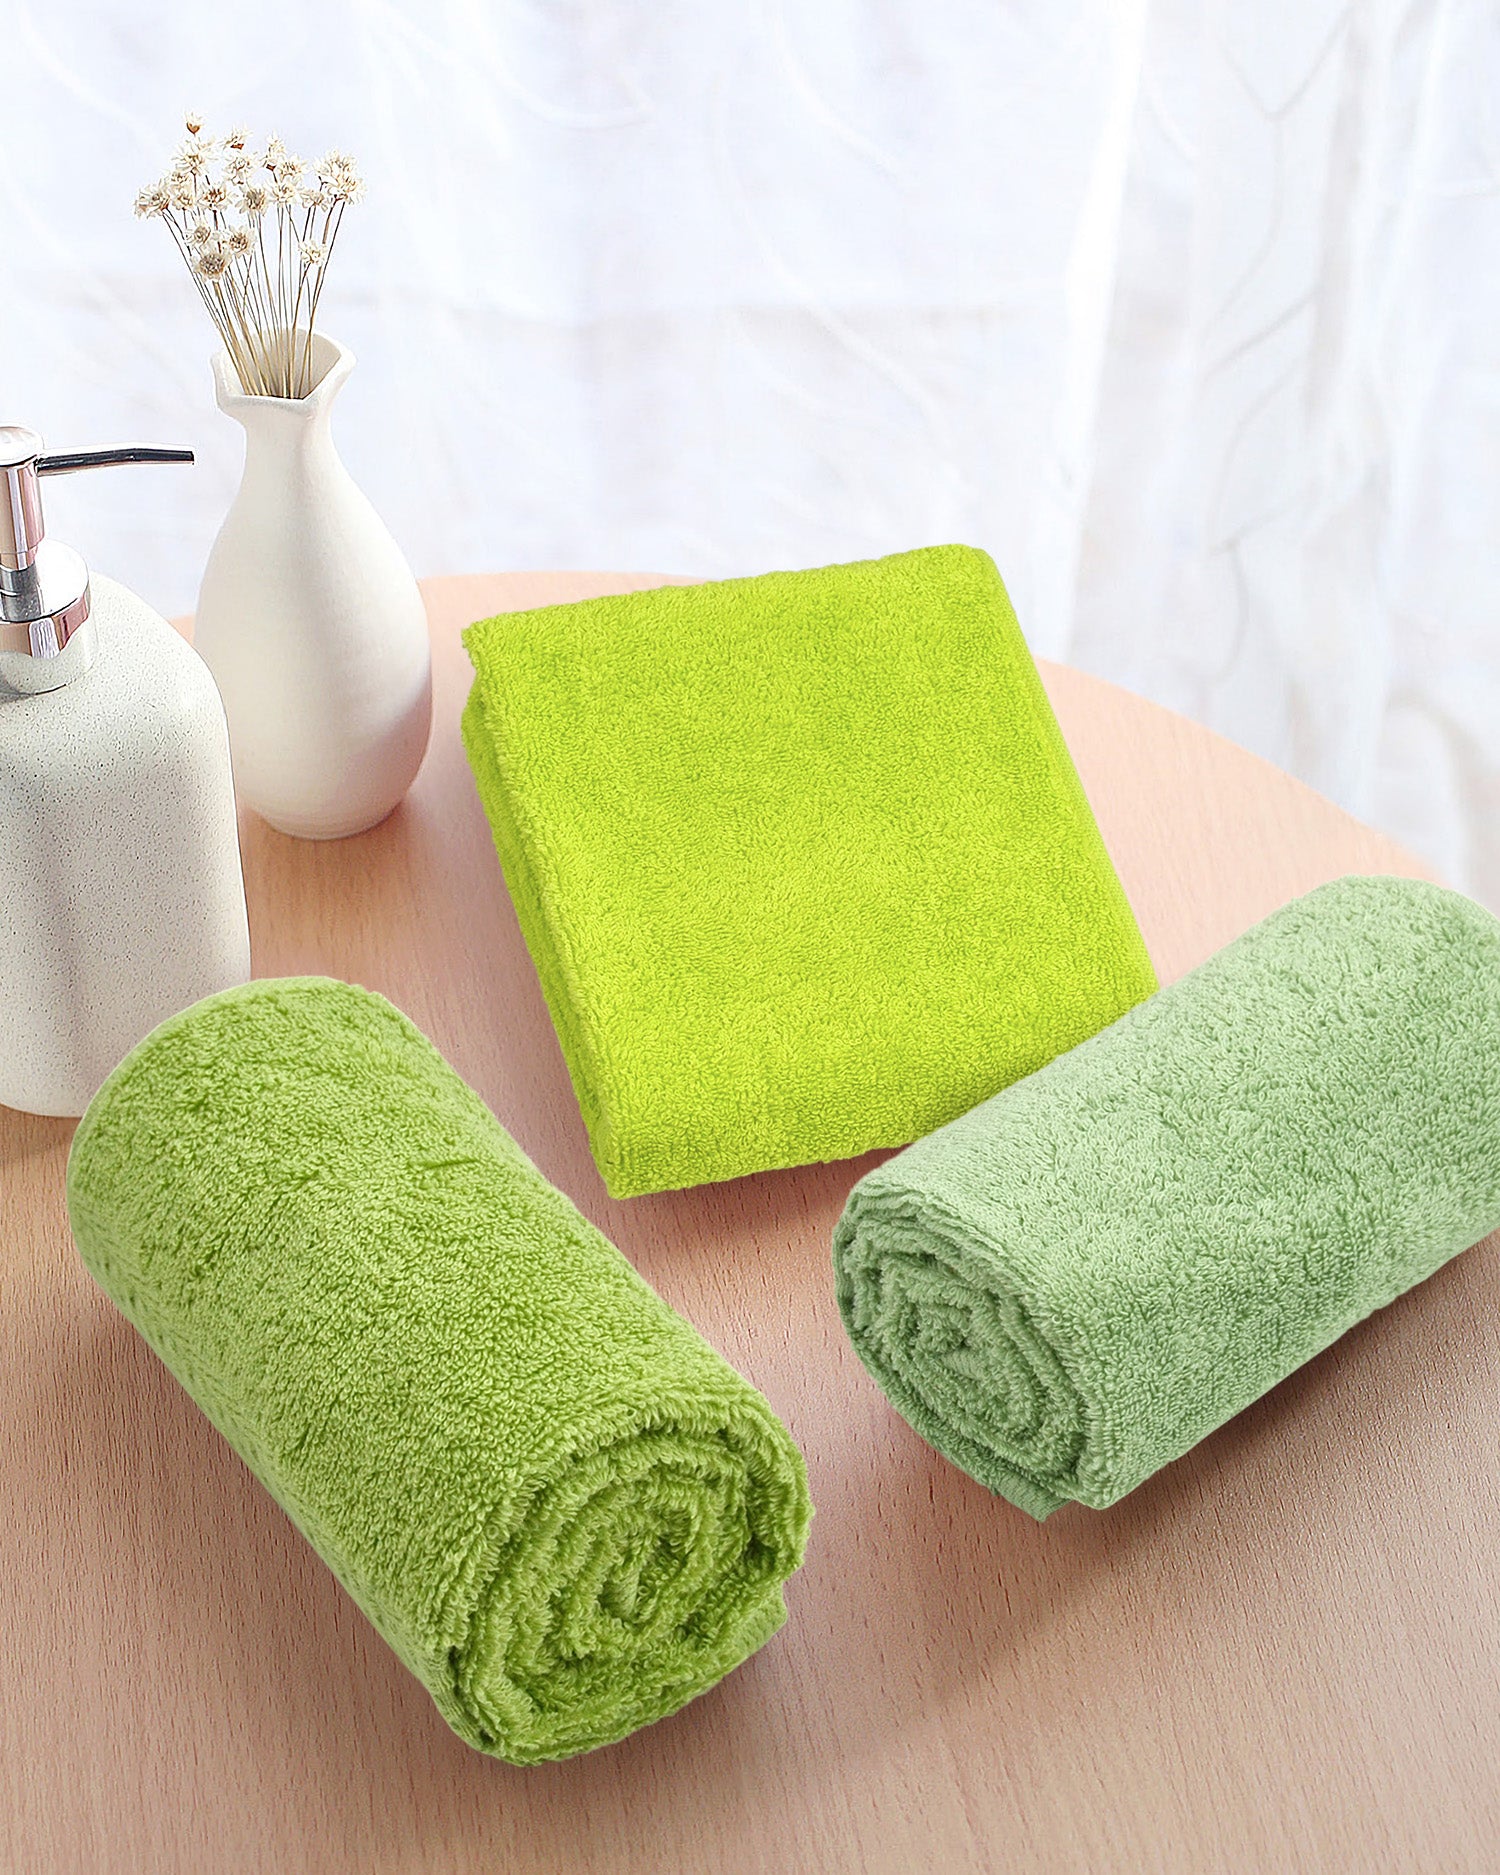  Cleanbear Hand Towels 12 Pack 12 Colors 100% Cotton